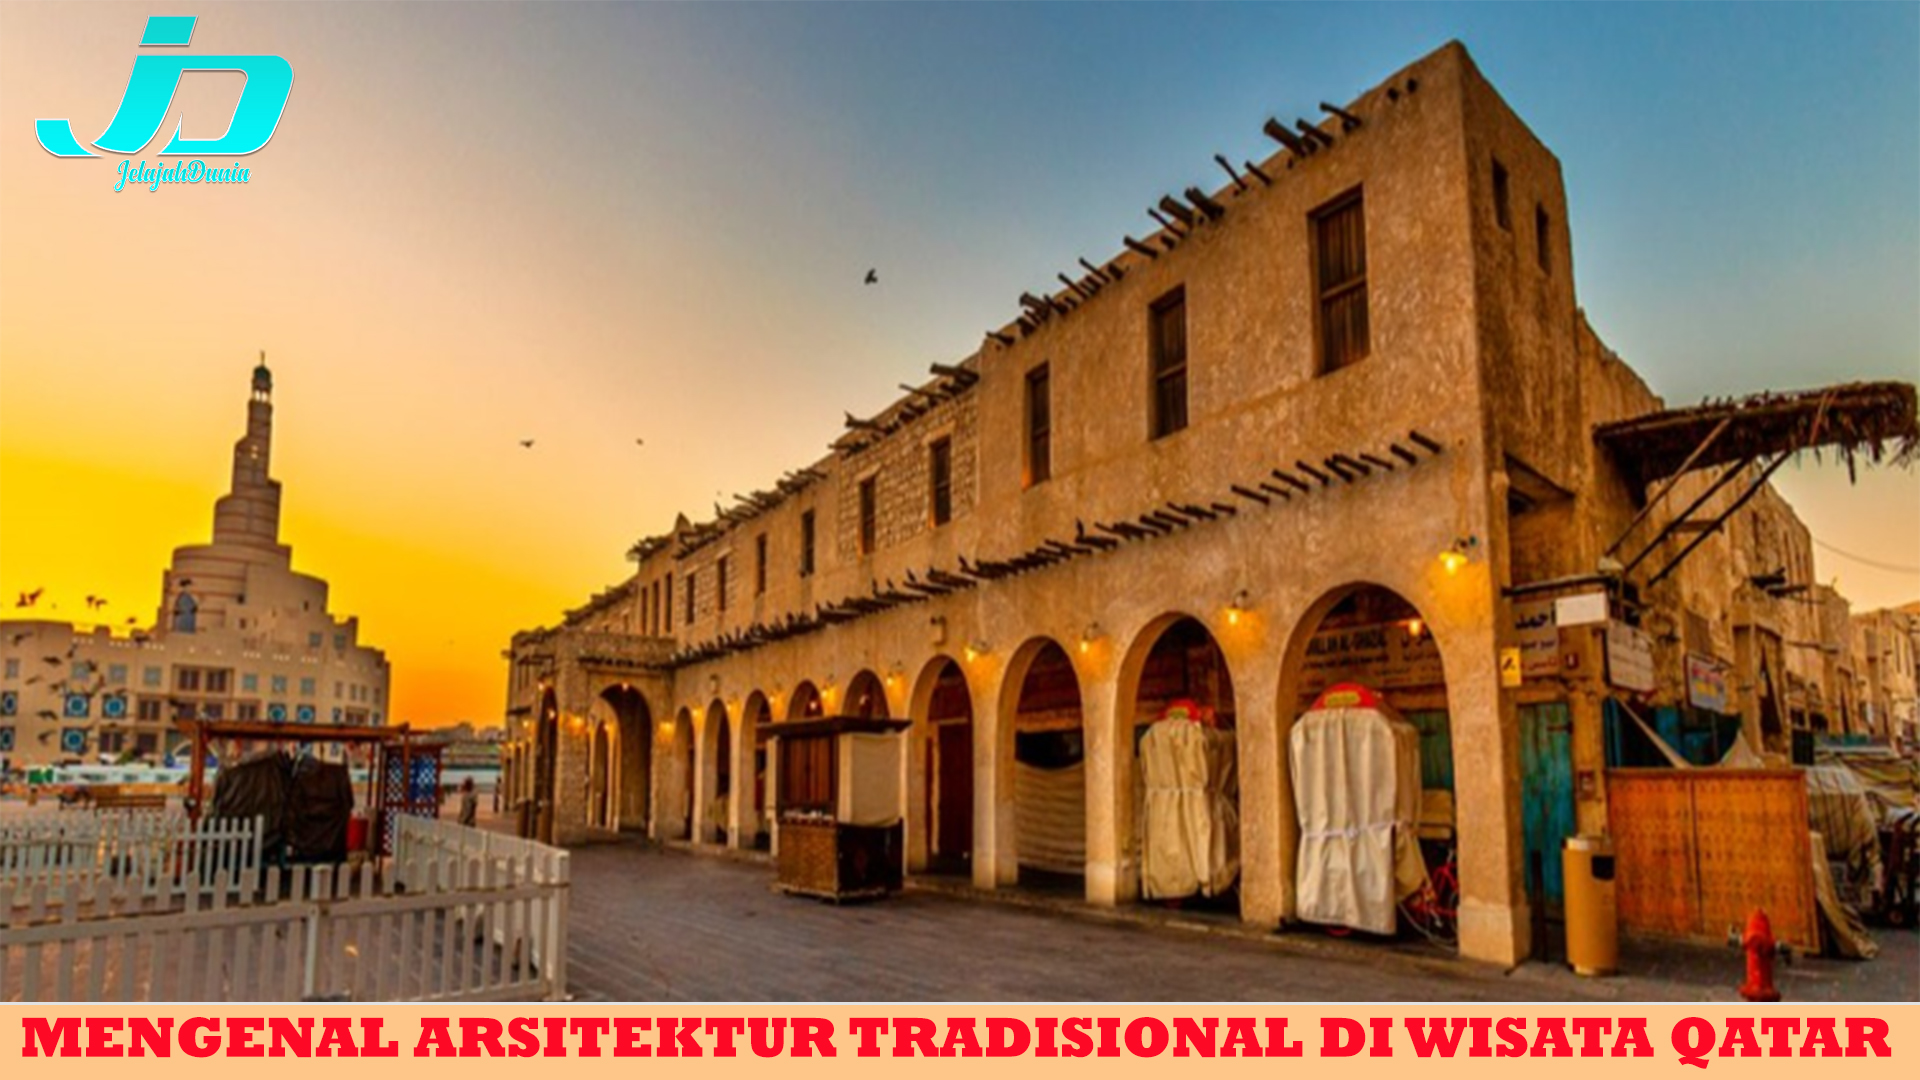 Mengenal Arsitektur Tradisional di Wisata Qatar